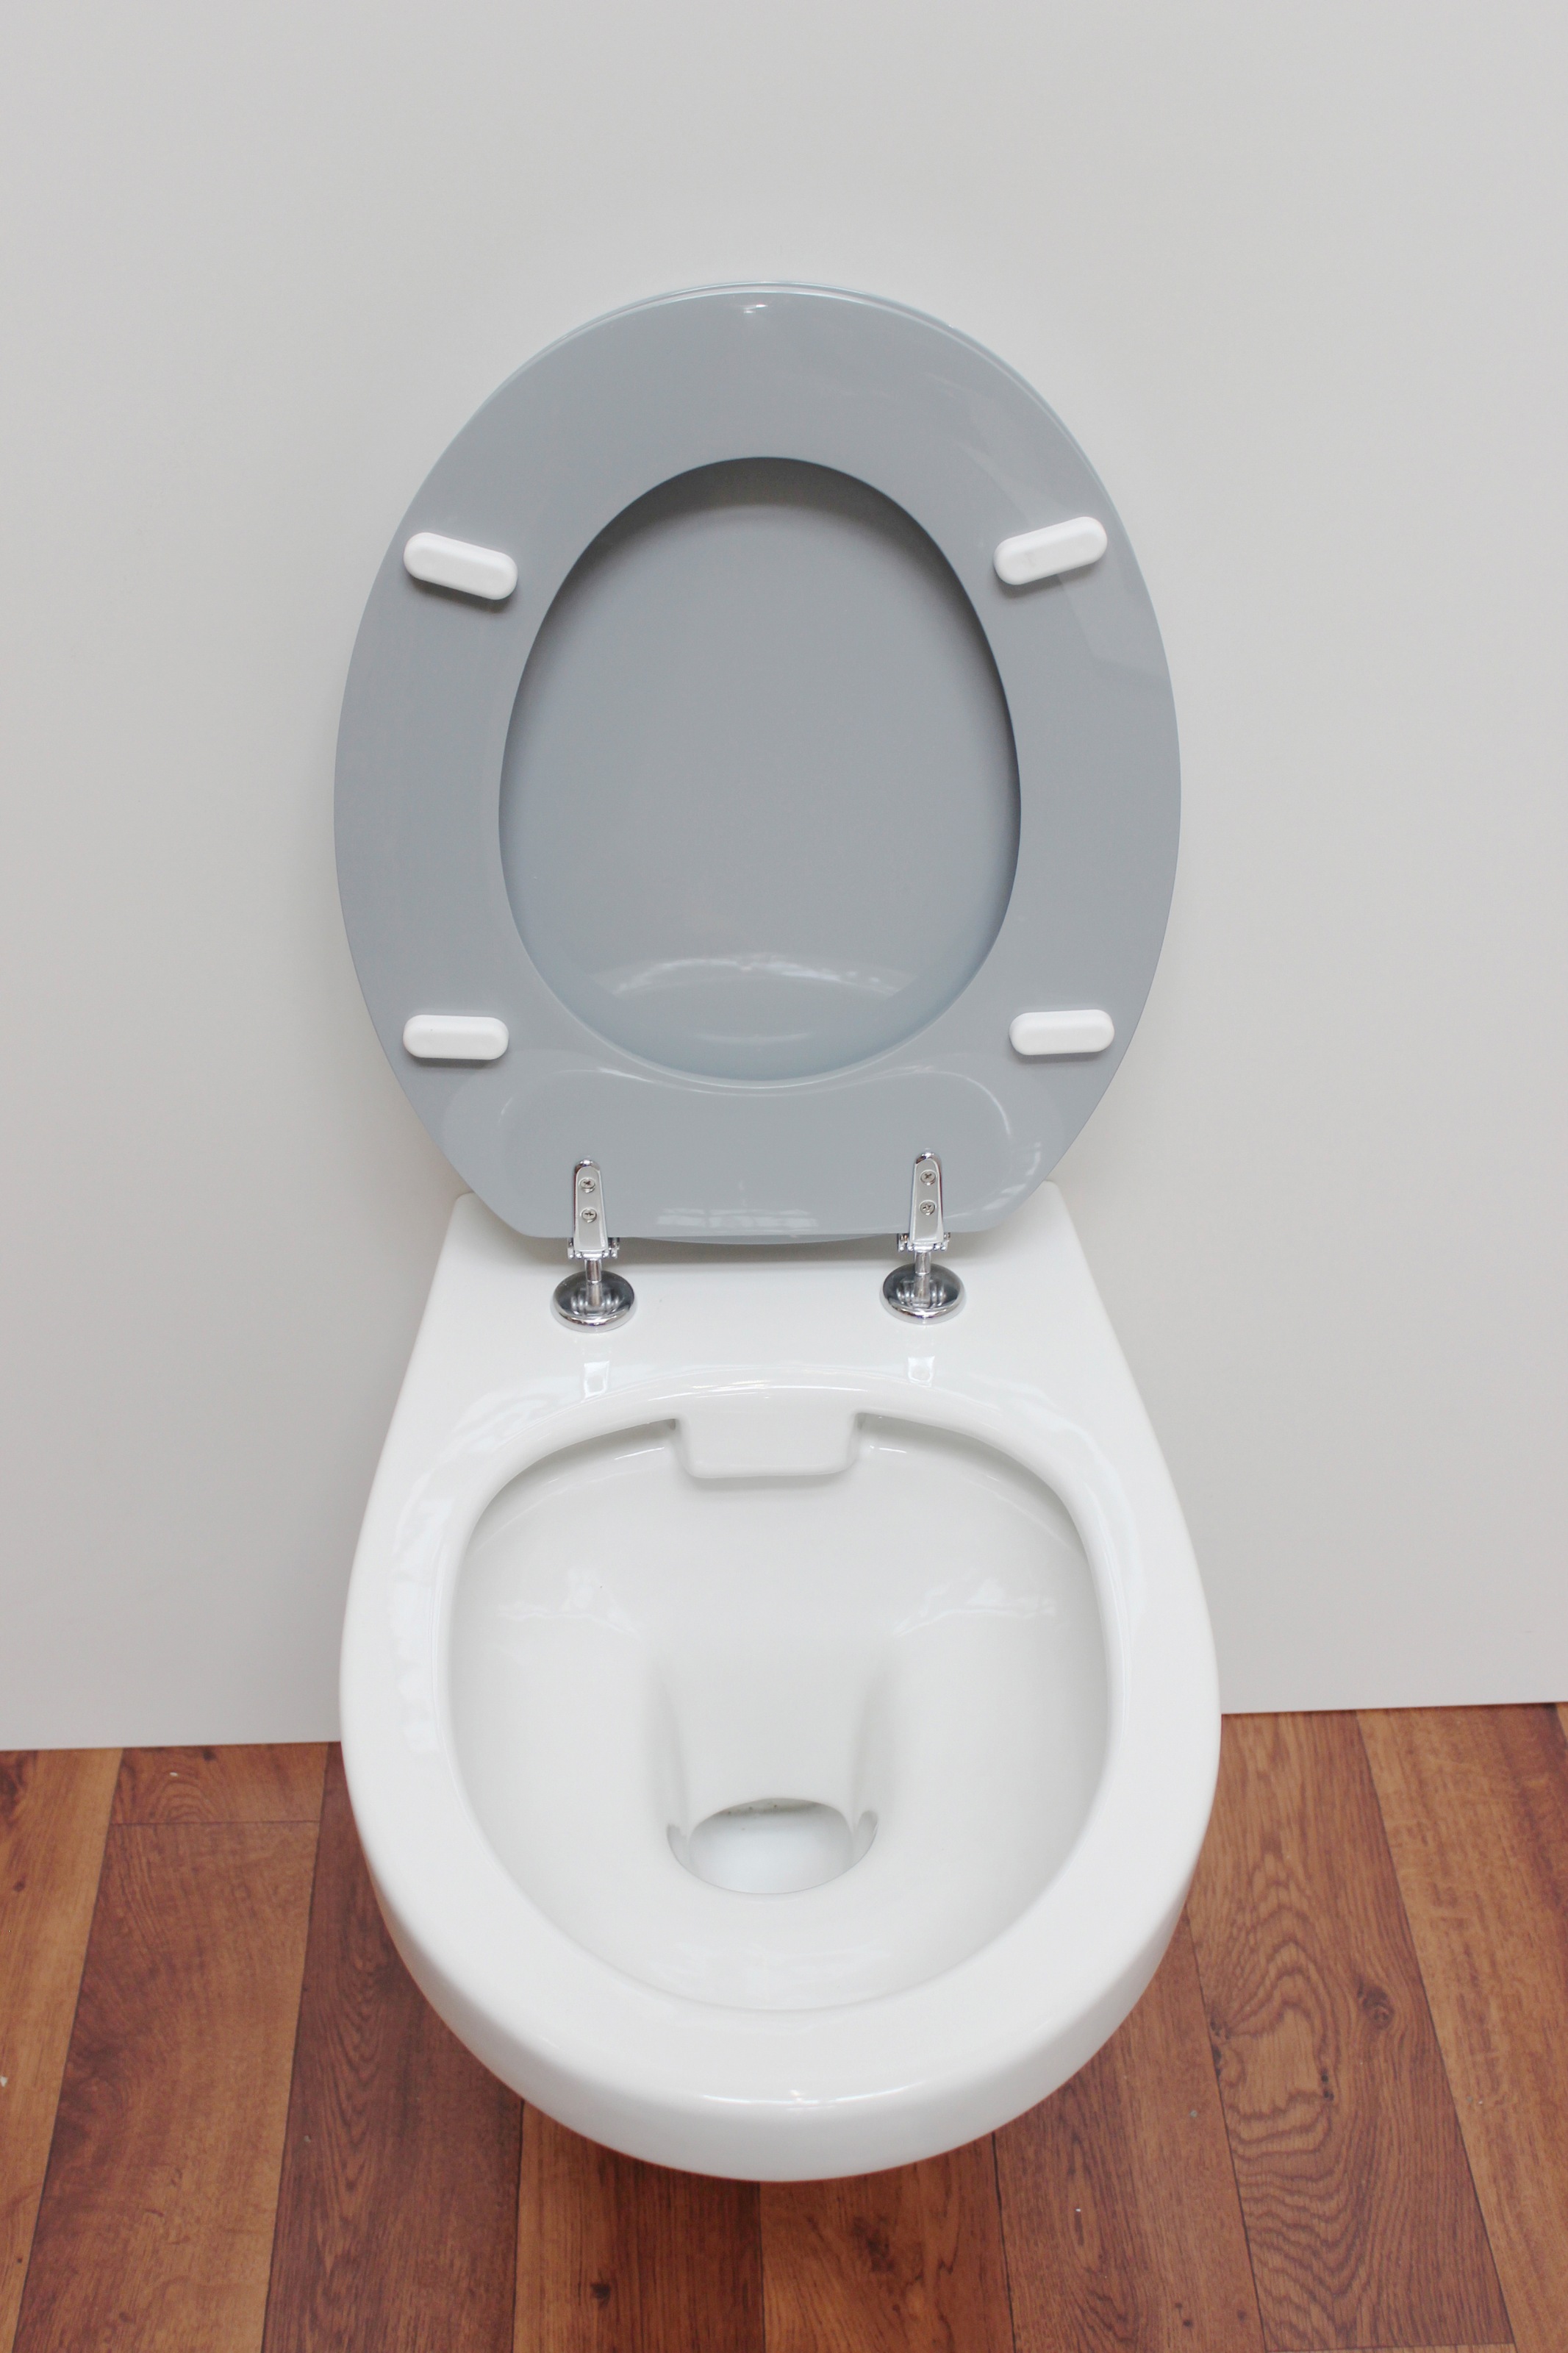 ADOB WC-Sitz »Capri«, mit Messing verchromten Scharnieren